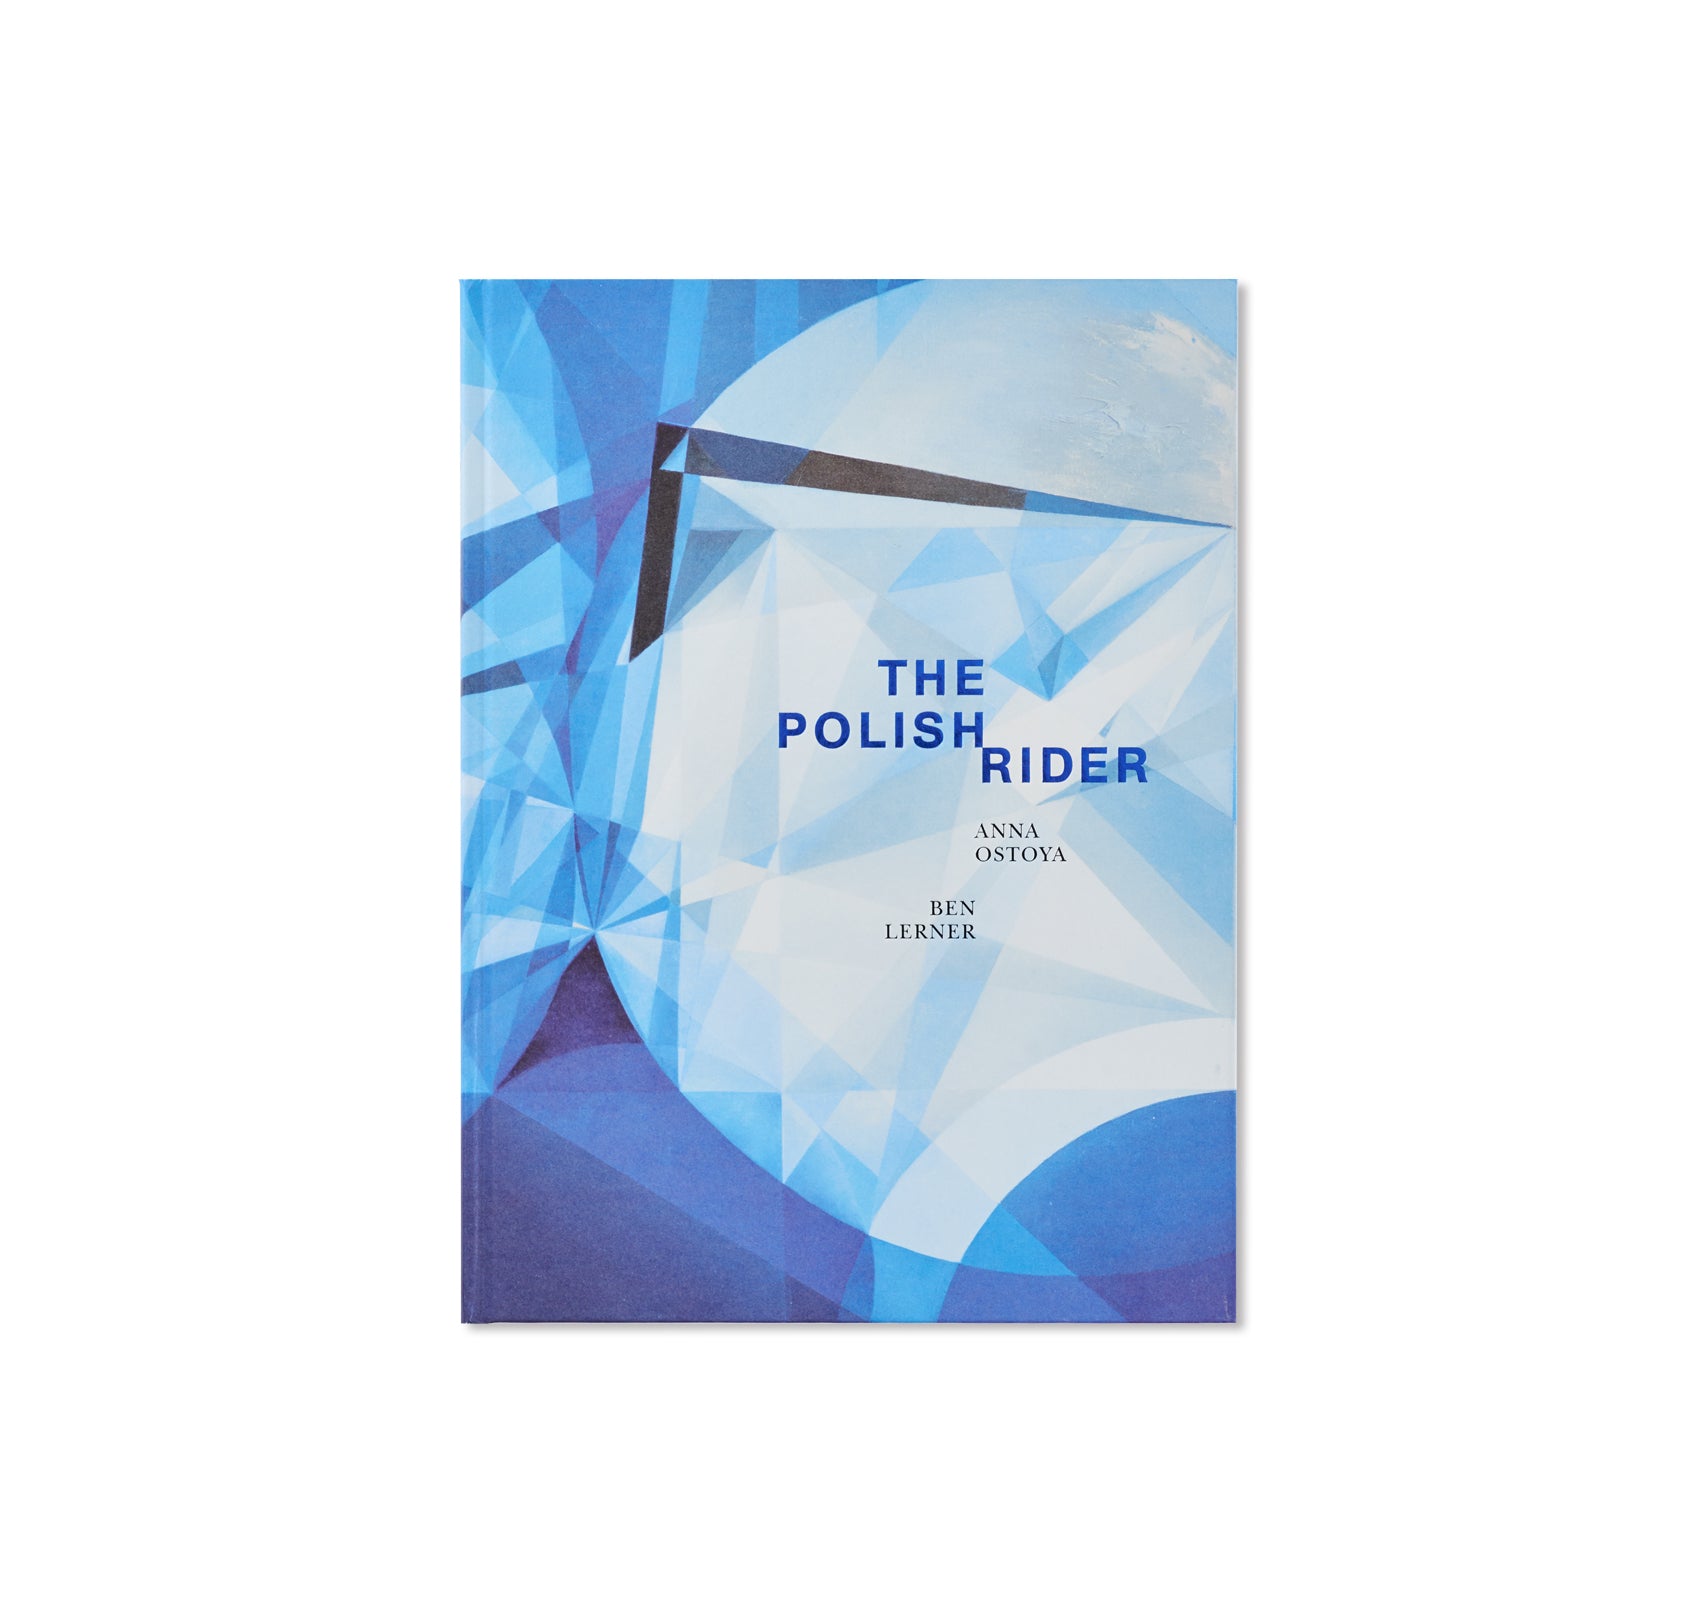 THE POLISH RIDER by Ben Lerner & Anna Ostoya